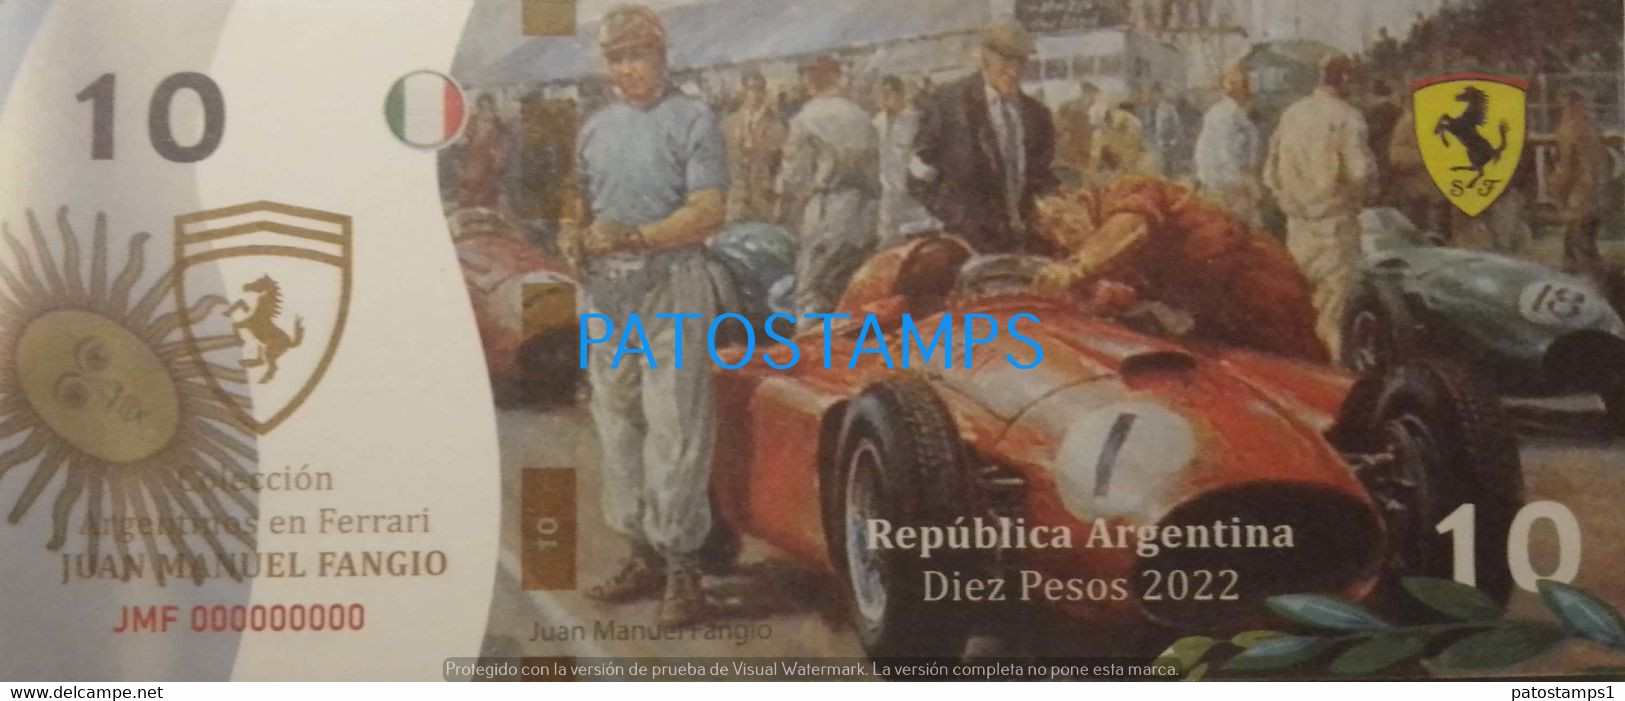 192535 BILLETE FANTASY TICKET 20 BANK ARGENTINA AUTOMOVILISMO CAR FERRARI RUNNER CARLOS REUTEMAN NO POSTCARD - Vrac - Billets